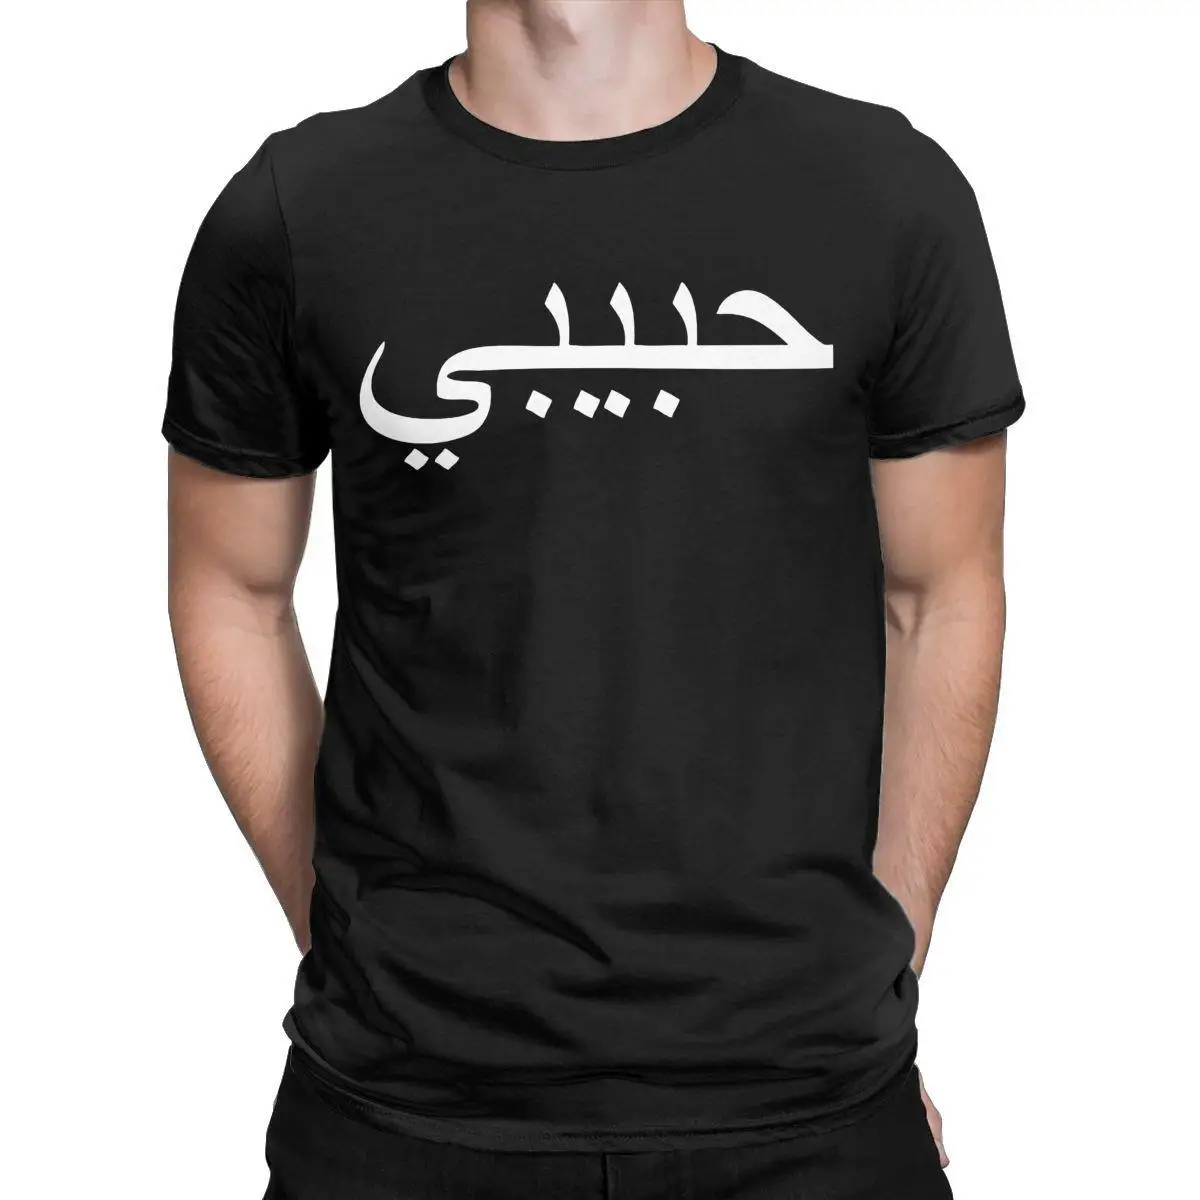 Habibi Arabic Word For Sweetheart Bro T Shirt for Men Cotton Humor T-Shirts Crew Neck Tee Shirt Short Sleeve Tops Gift Idea